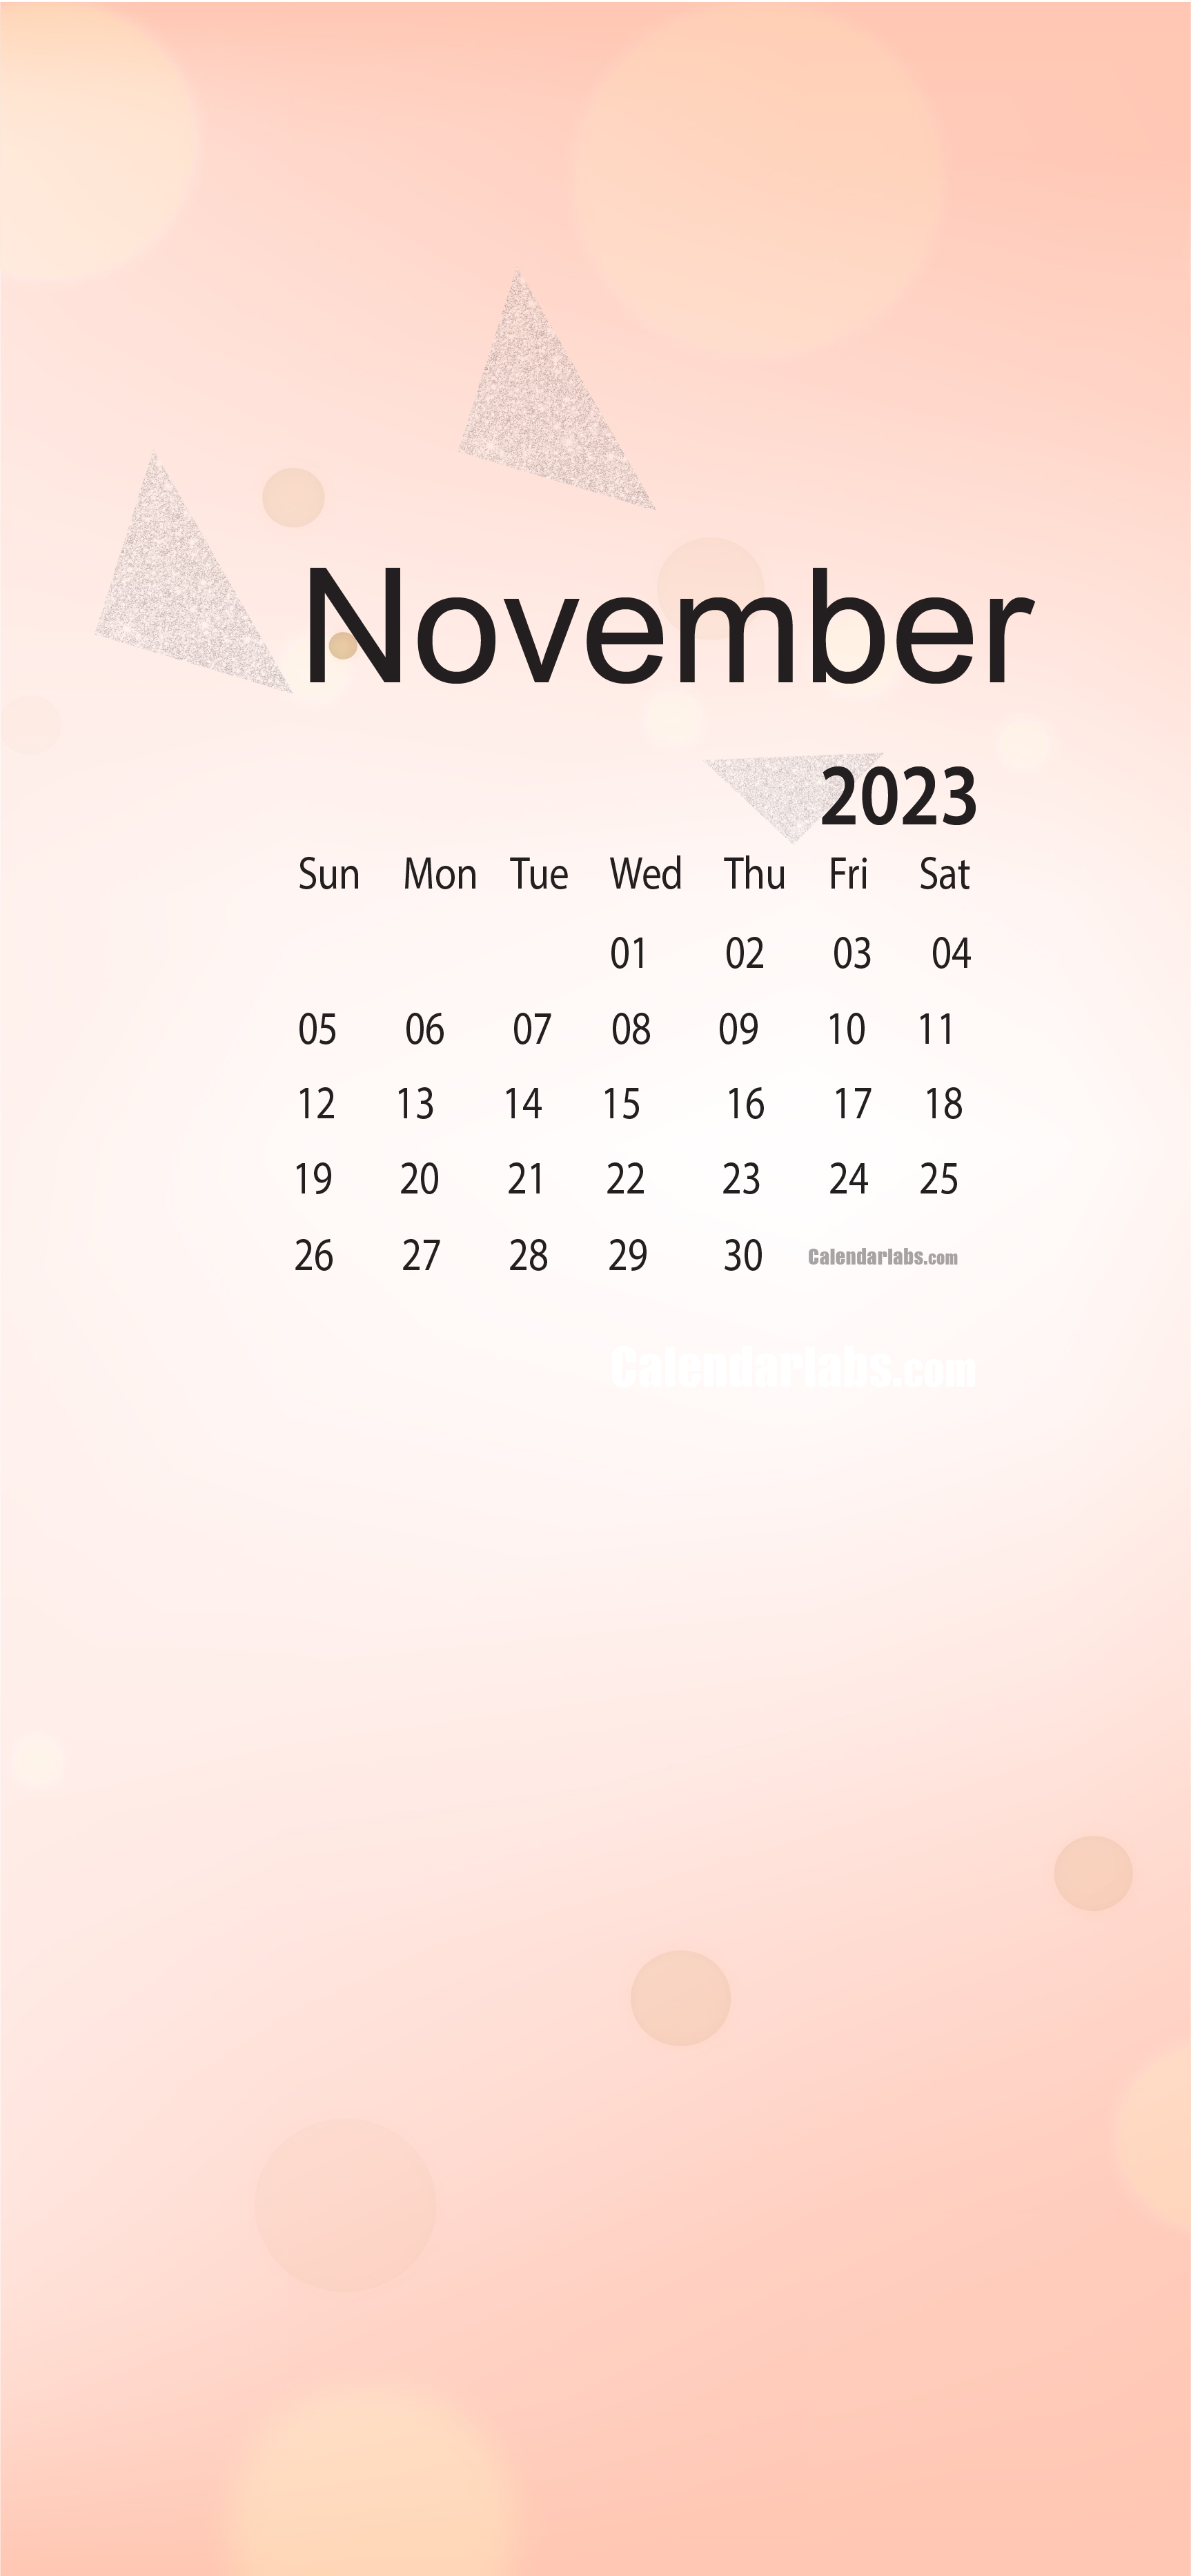 November 2023 Desktop Wallpaper Calendar - CalendarLabs